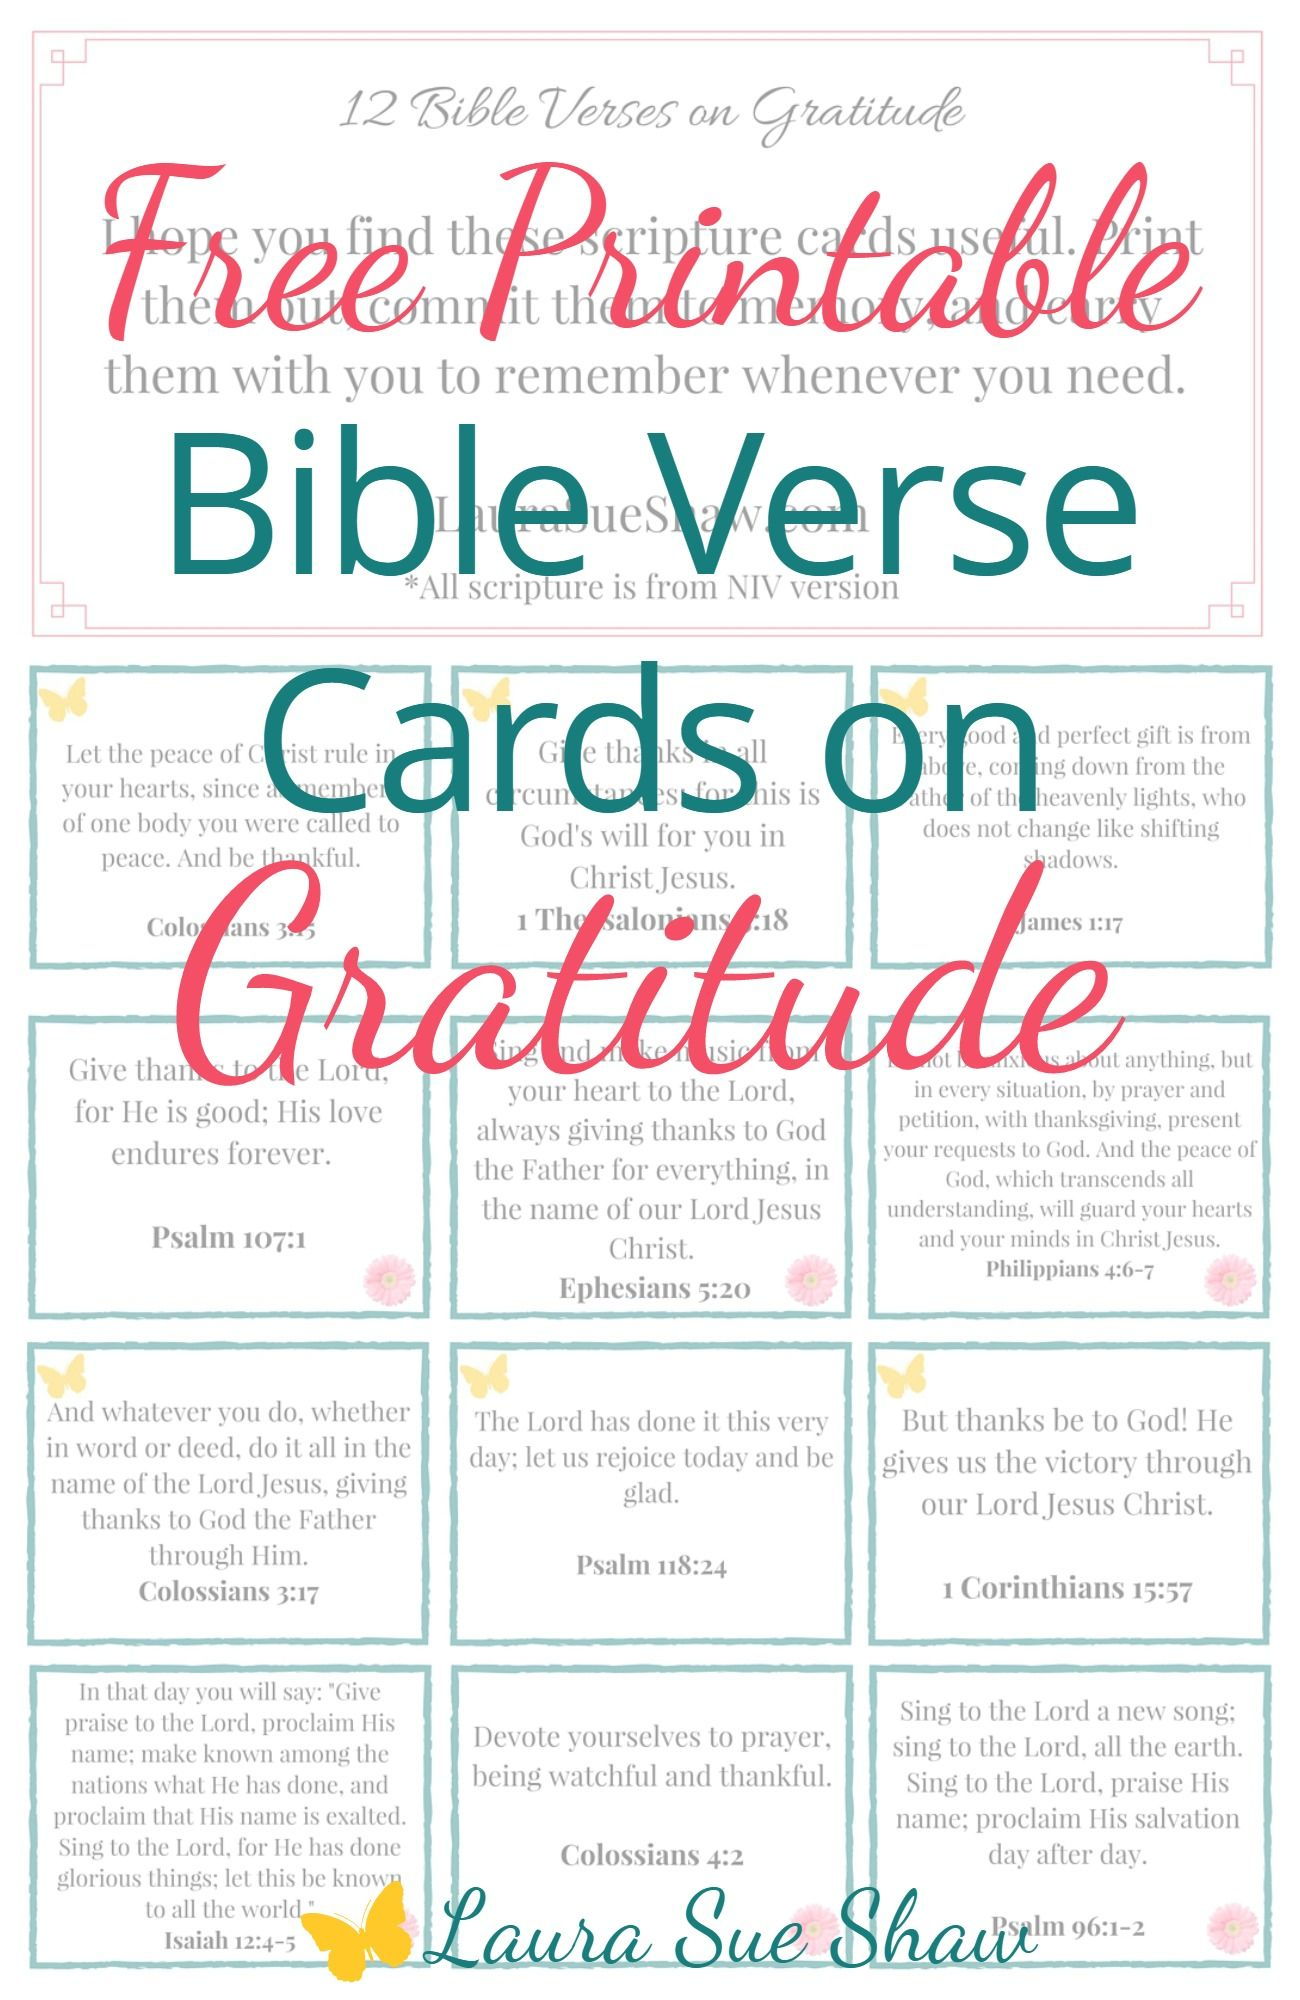 Free Printable Bible Verse Cards On Gratitude | Prayer | Printable - Free Printable Bible Verse Cards